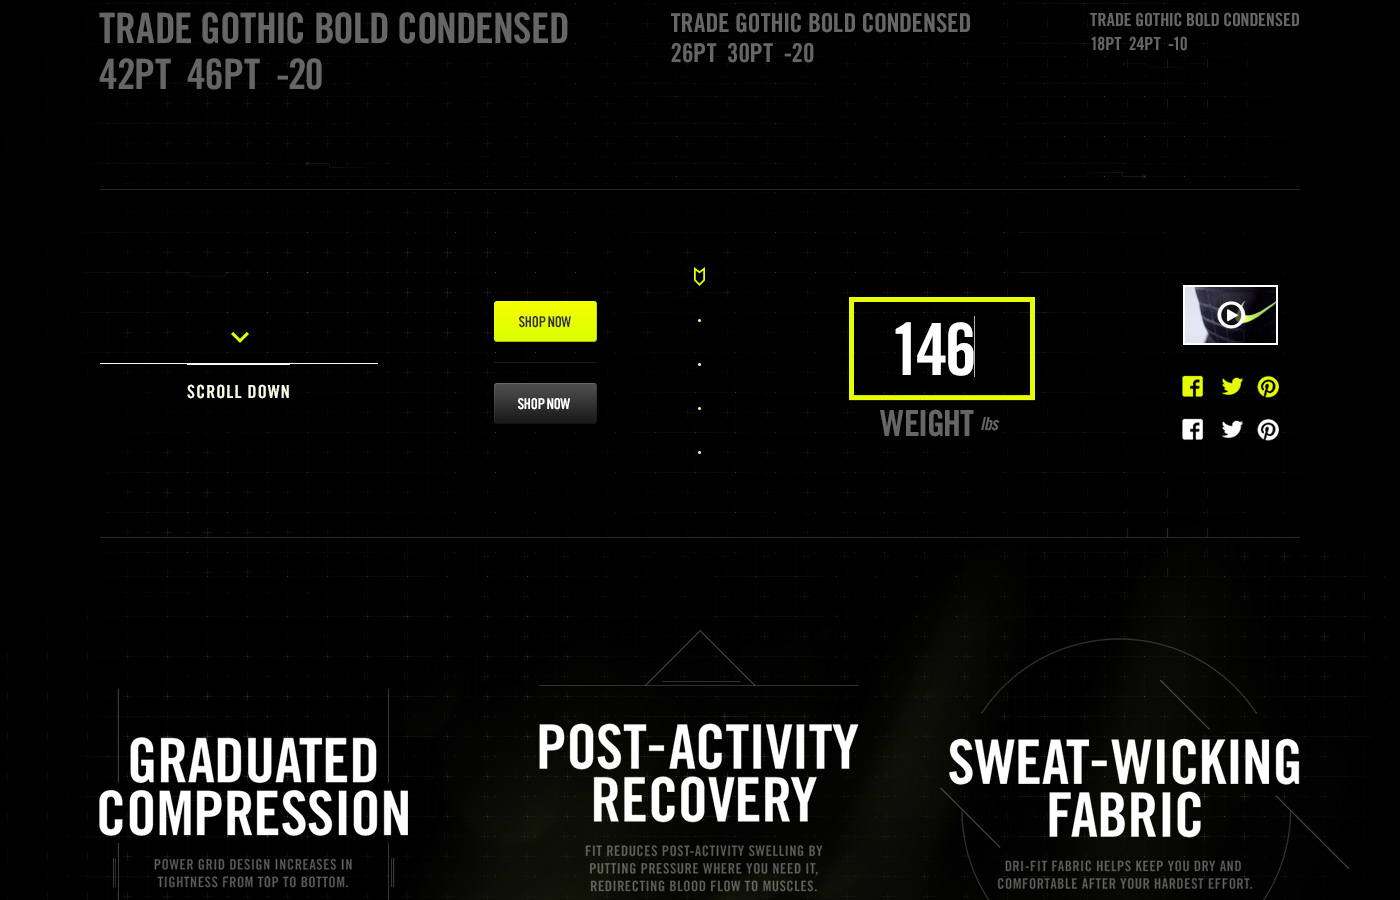 Nike athletic training recovery hypertight sport Pro Combat workout athlete